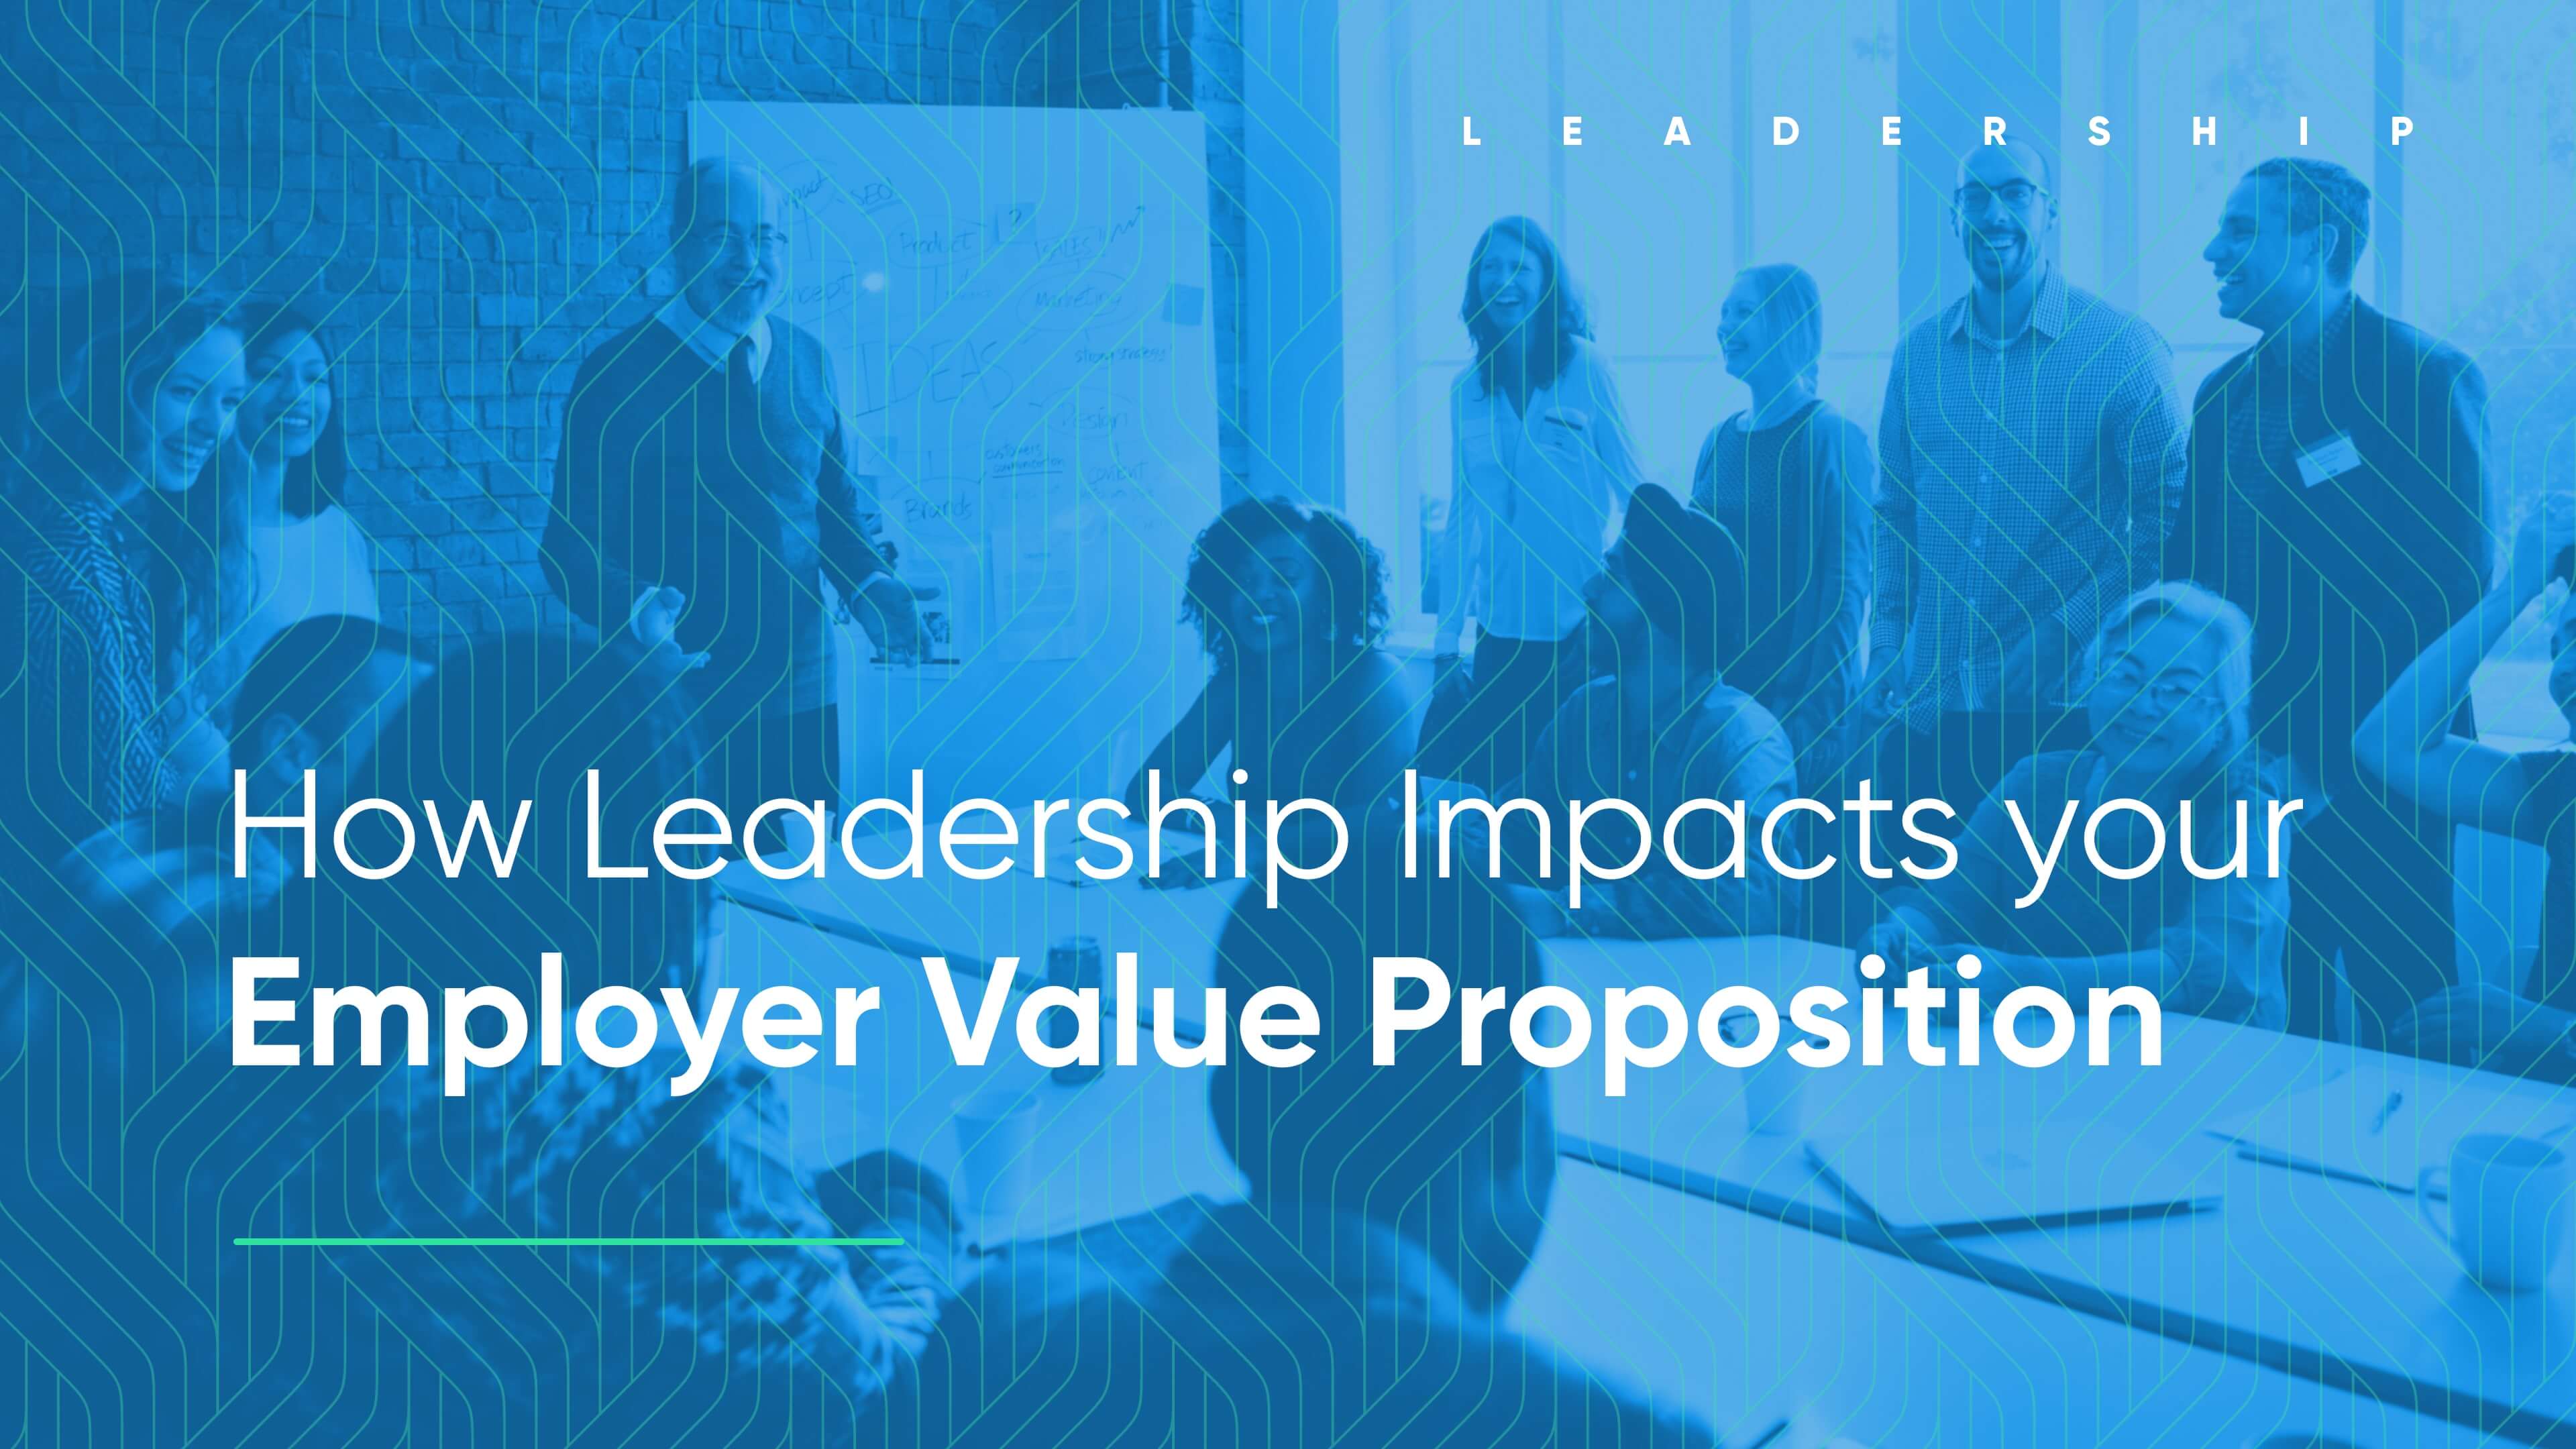 Leadership Value Proposition